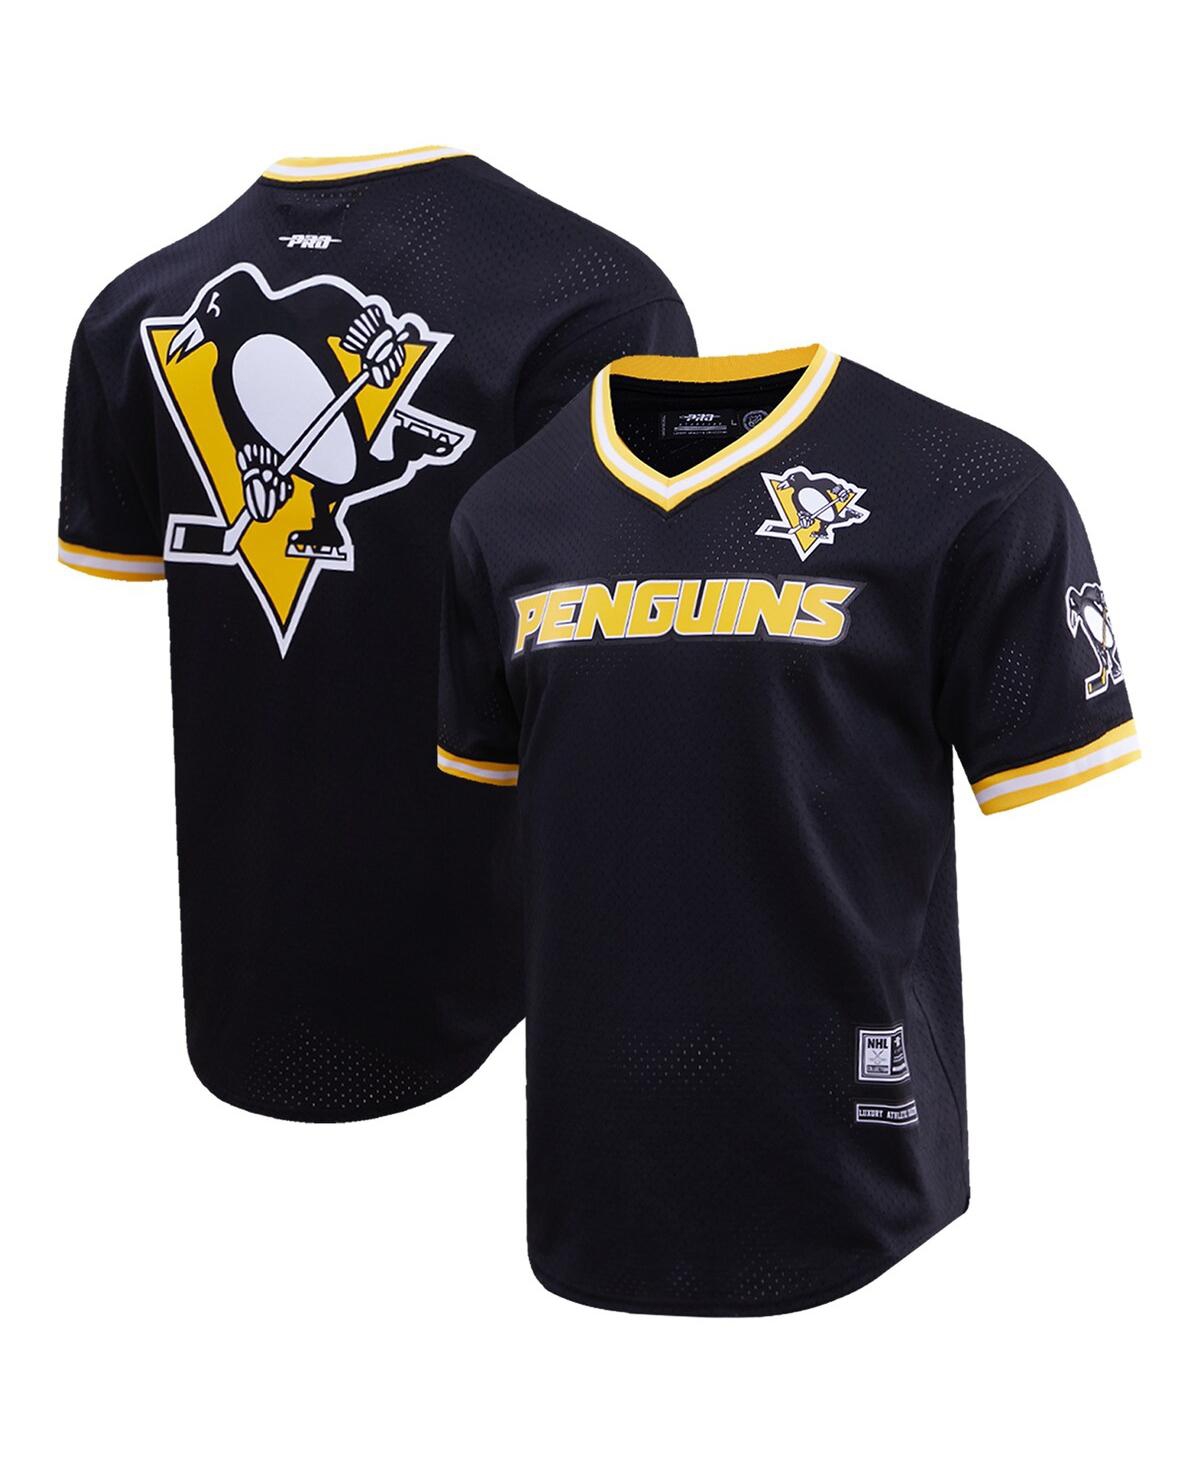 Shop Pro Standard Men's  Black Pittsburgh Penguins Classic Mesh V-neck T-shirt